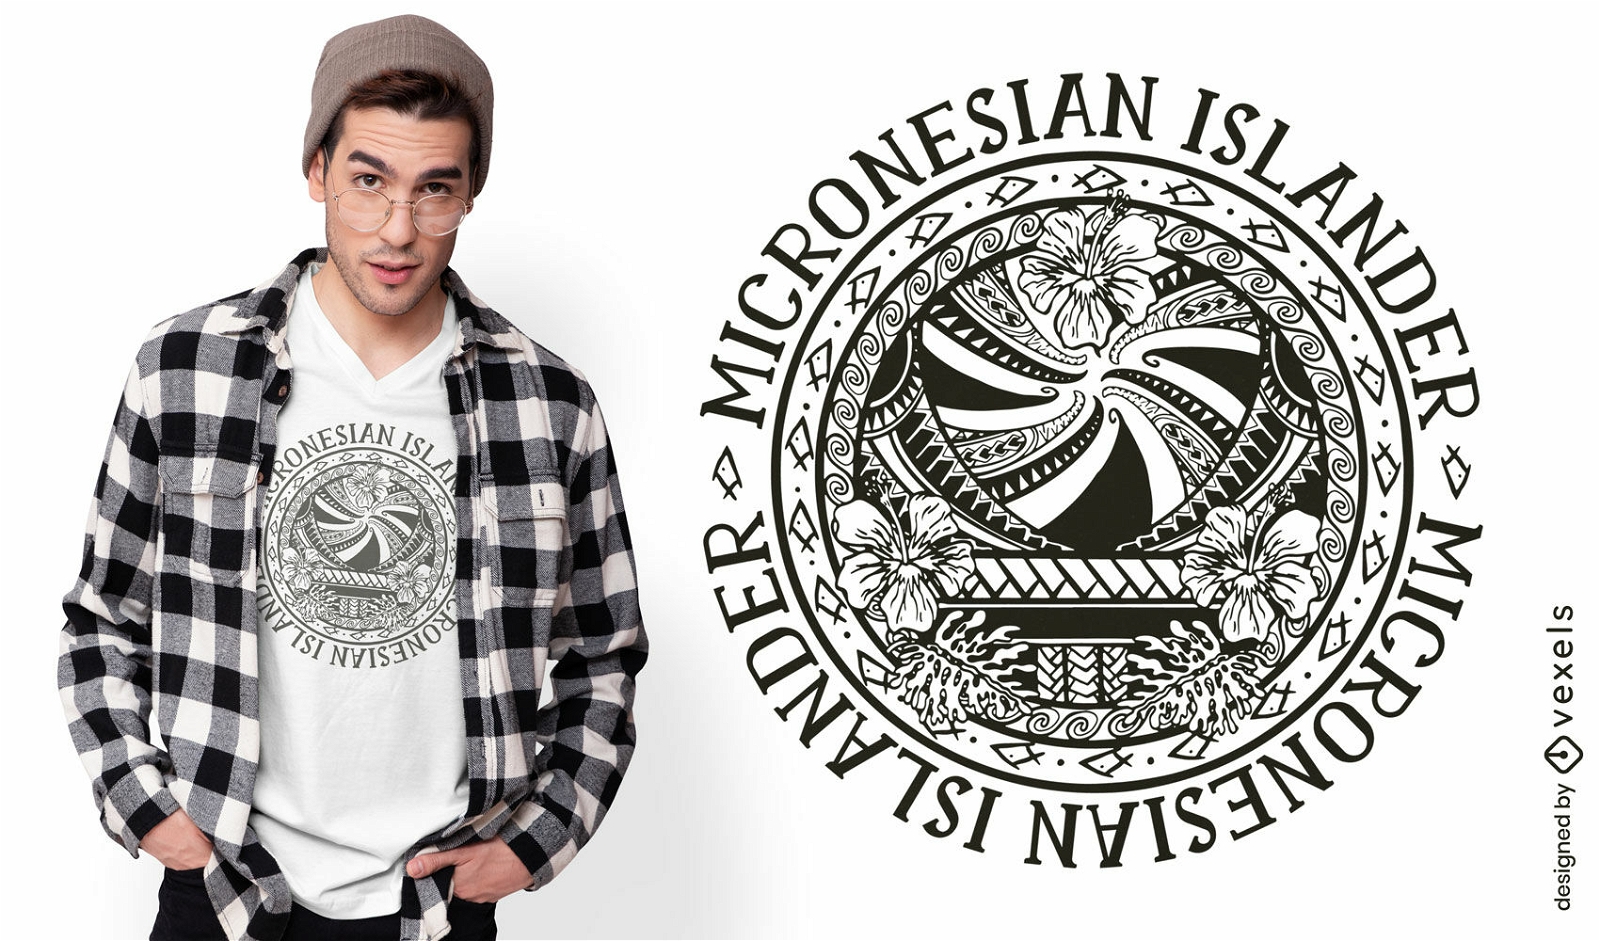 Micronesian island tropical t-shirt design